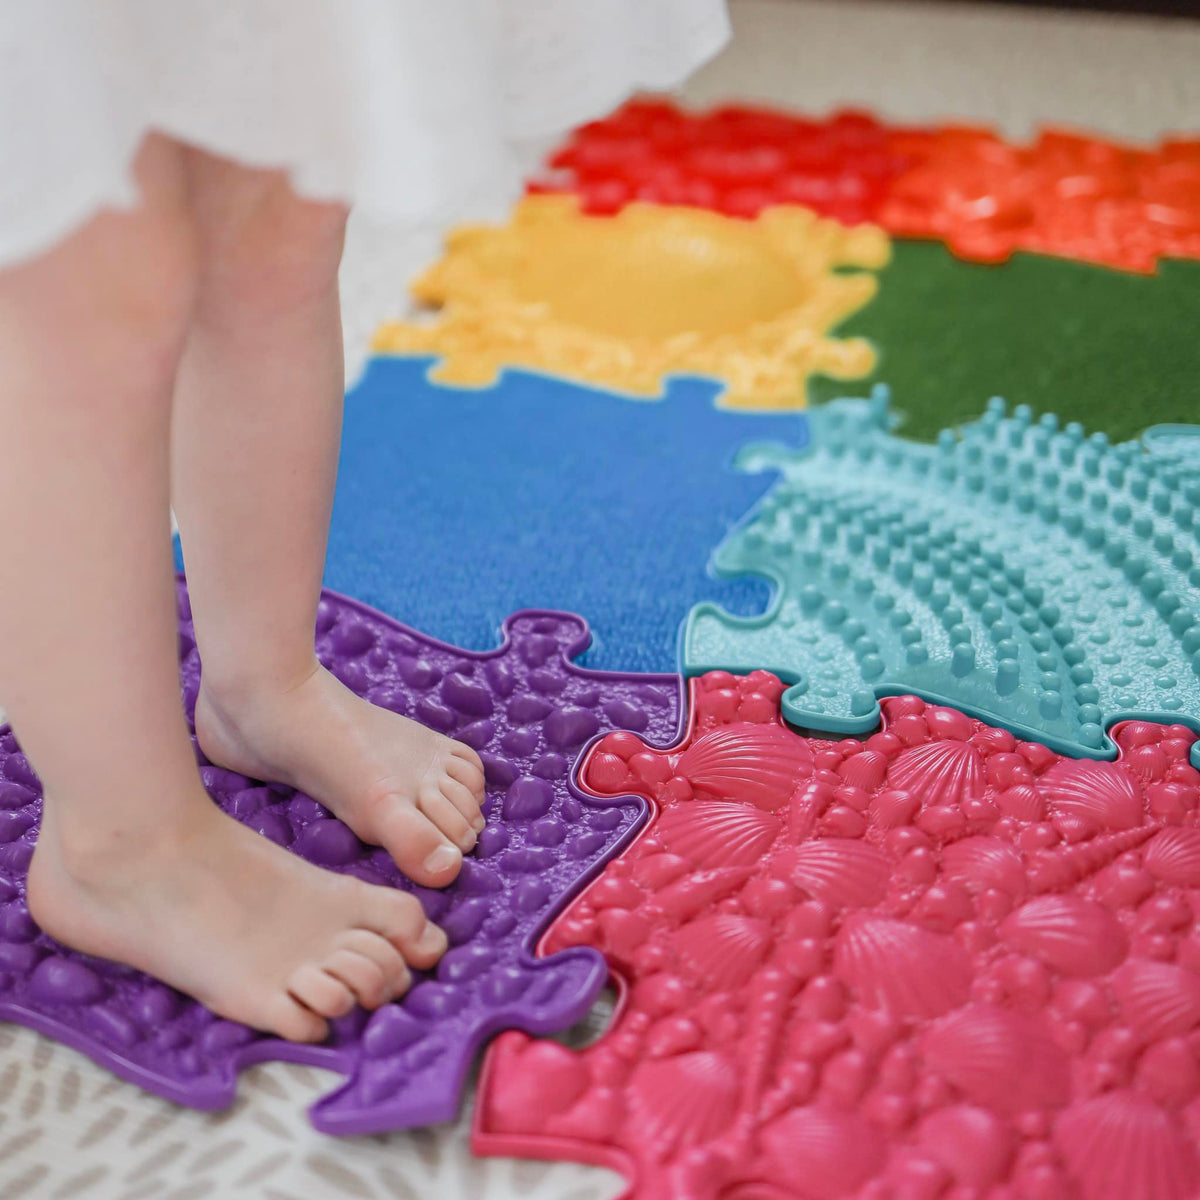 Sensory Playmat by Muffik - Why kids should go barefoot more! – TINNITOTS